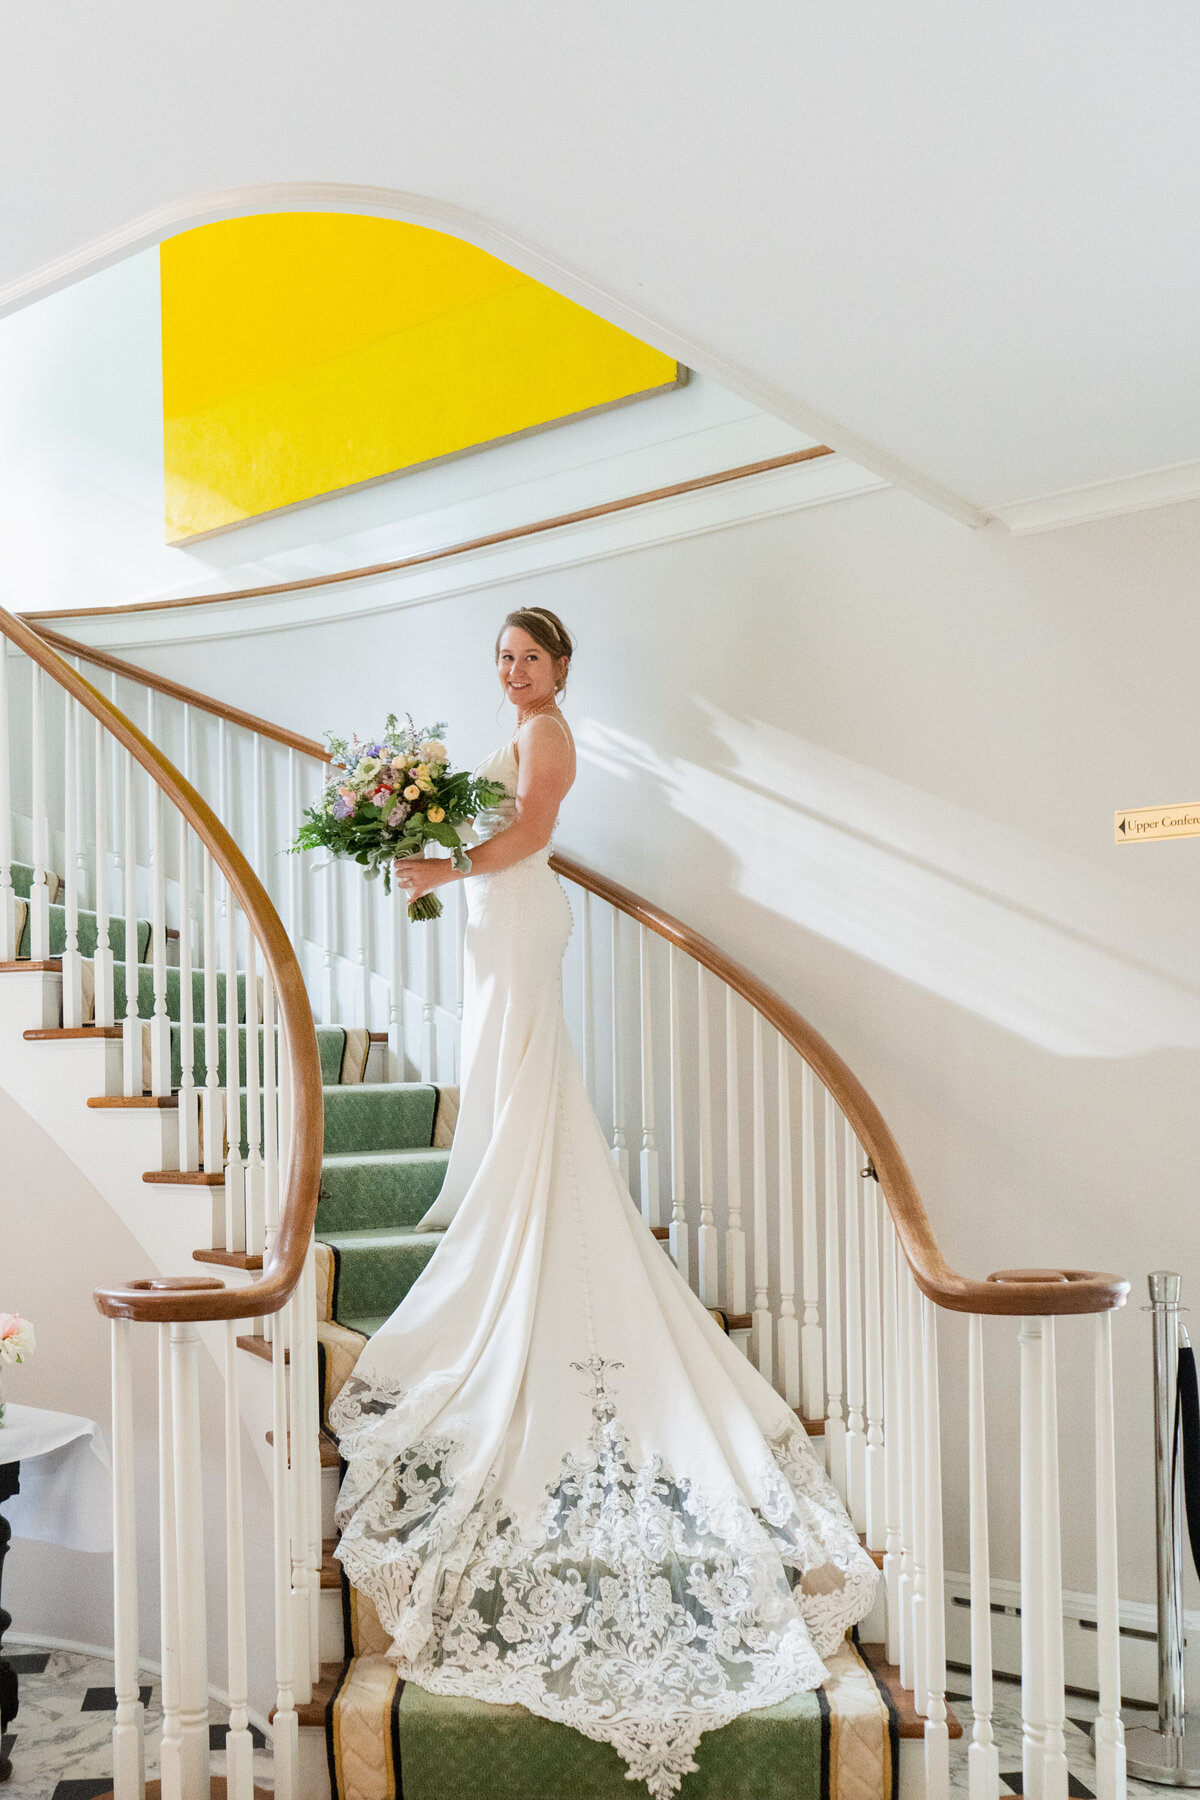 Elegant bride portrait on the stairs -4KArma Studio - wedding photographer in San Francisco